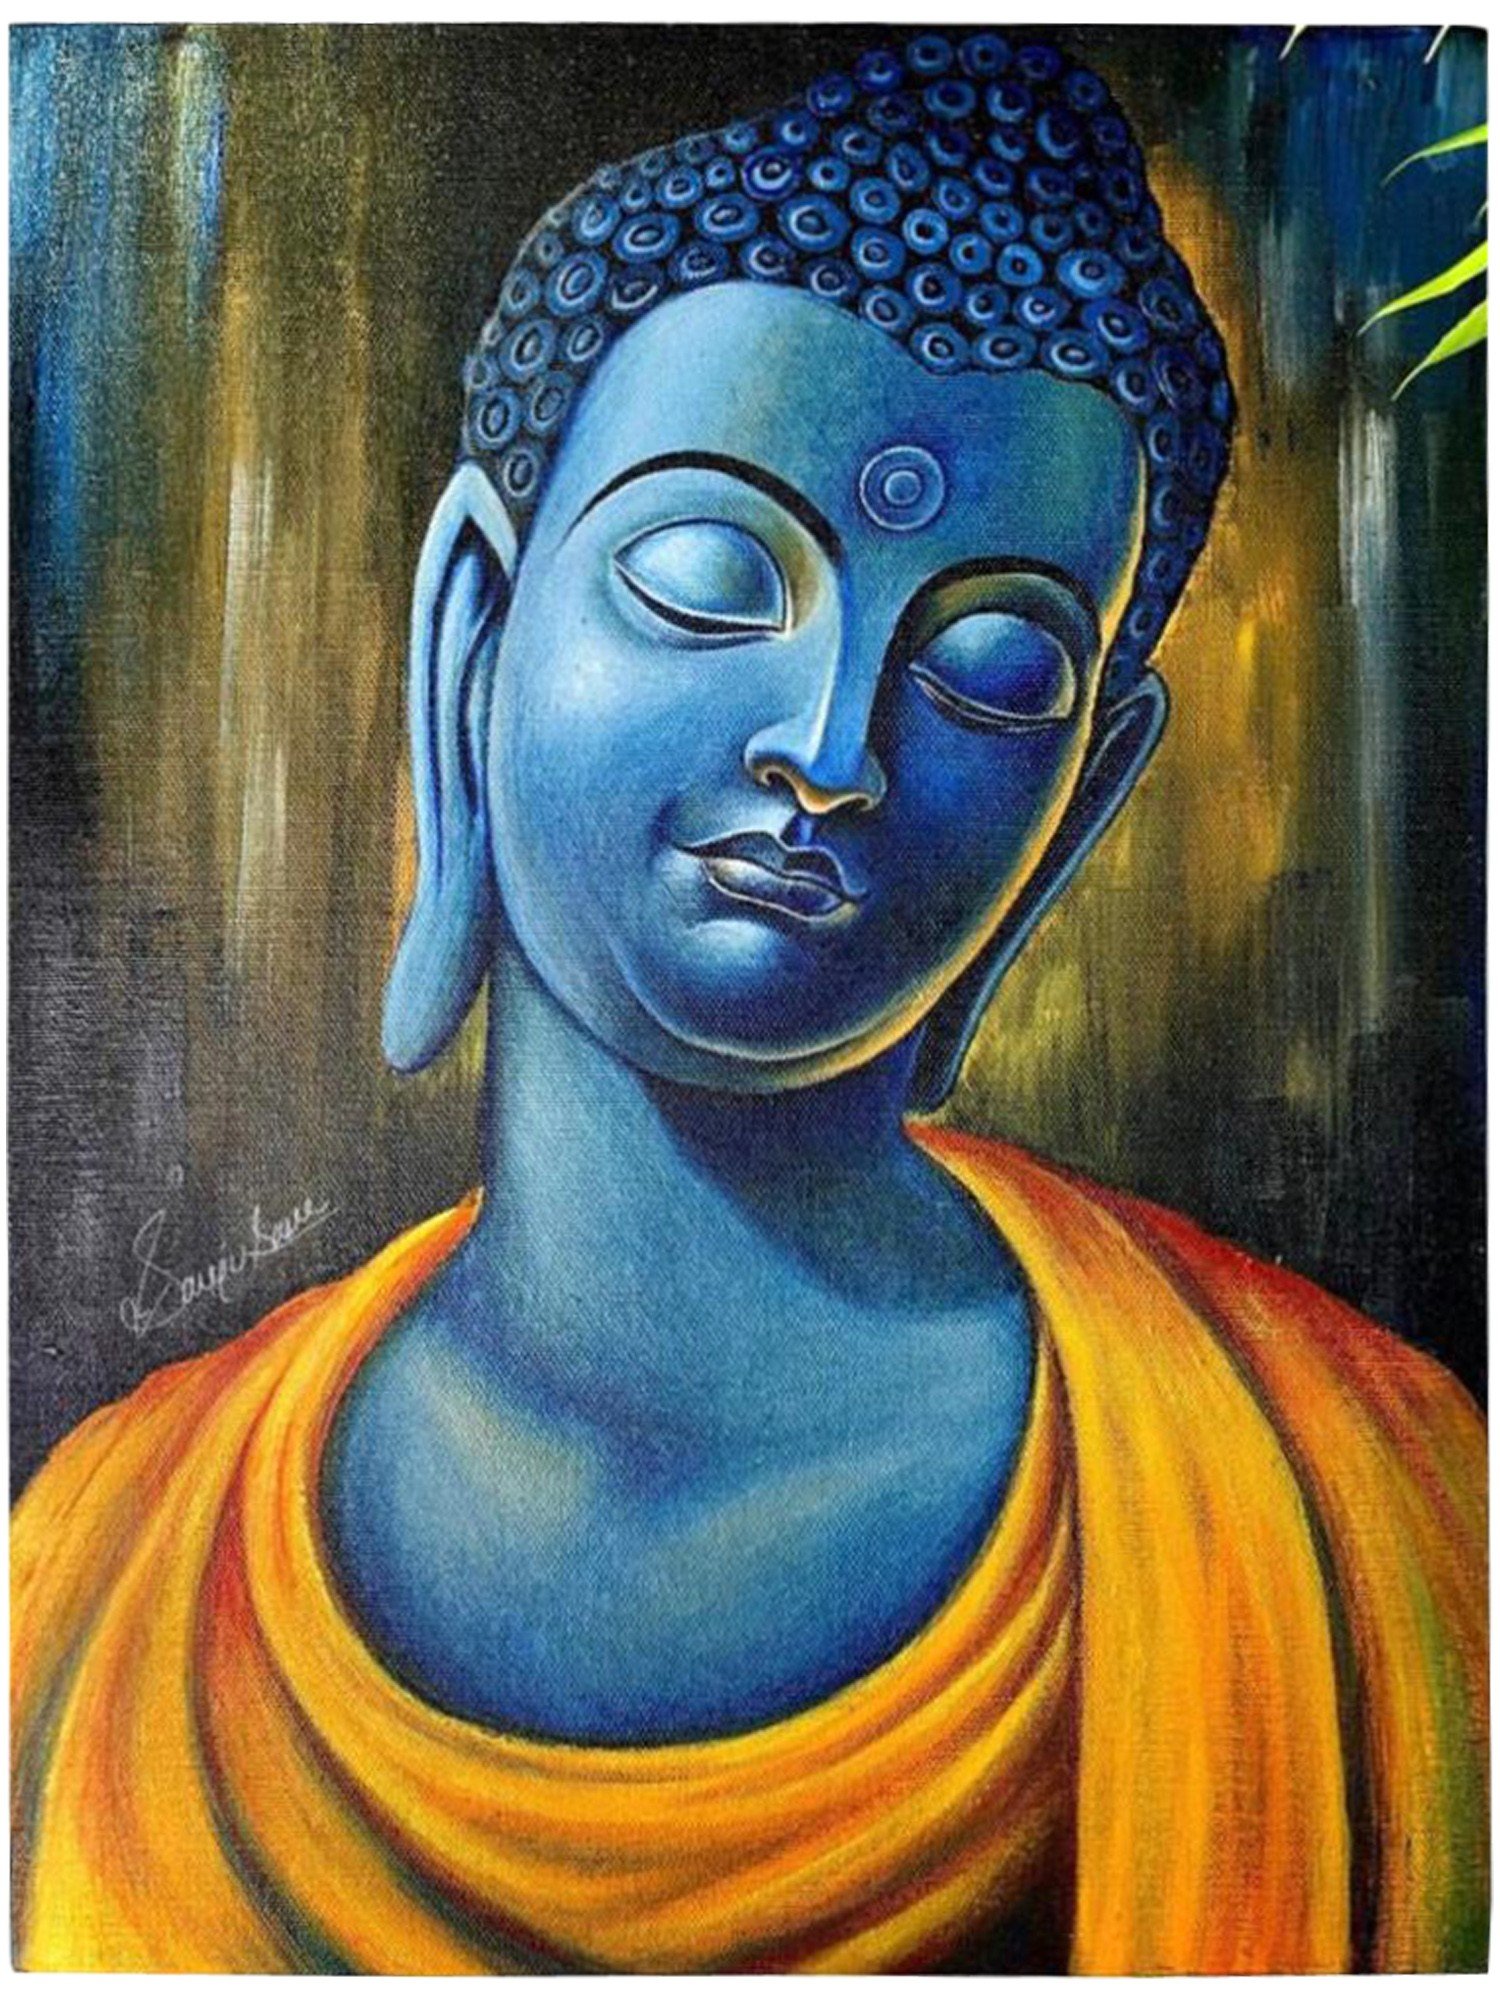 Lord Gautam Buddha Drawing Full Video Uploaded On YouTube....Link In Bio # gautambuddha #gautambuddha🙏 #gautambuddhaquotes… | Instagram